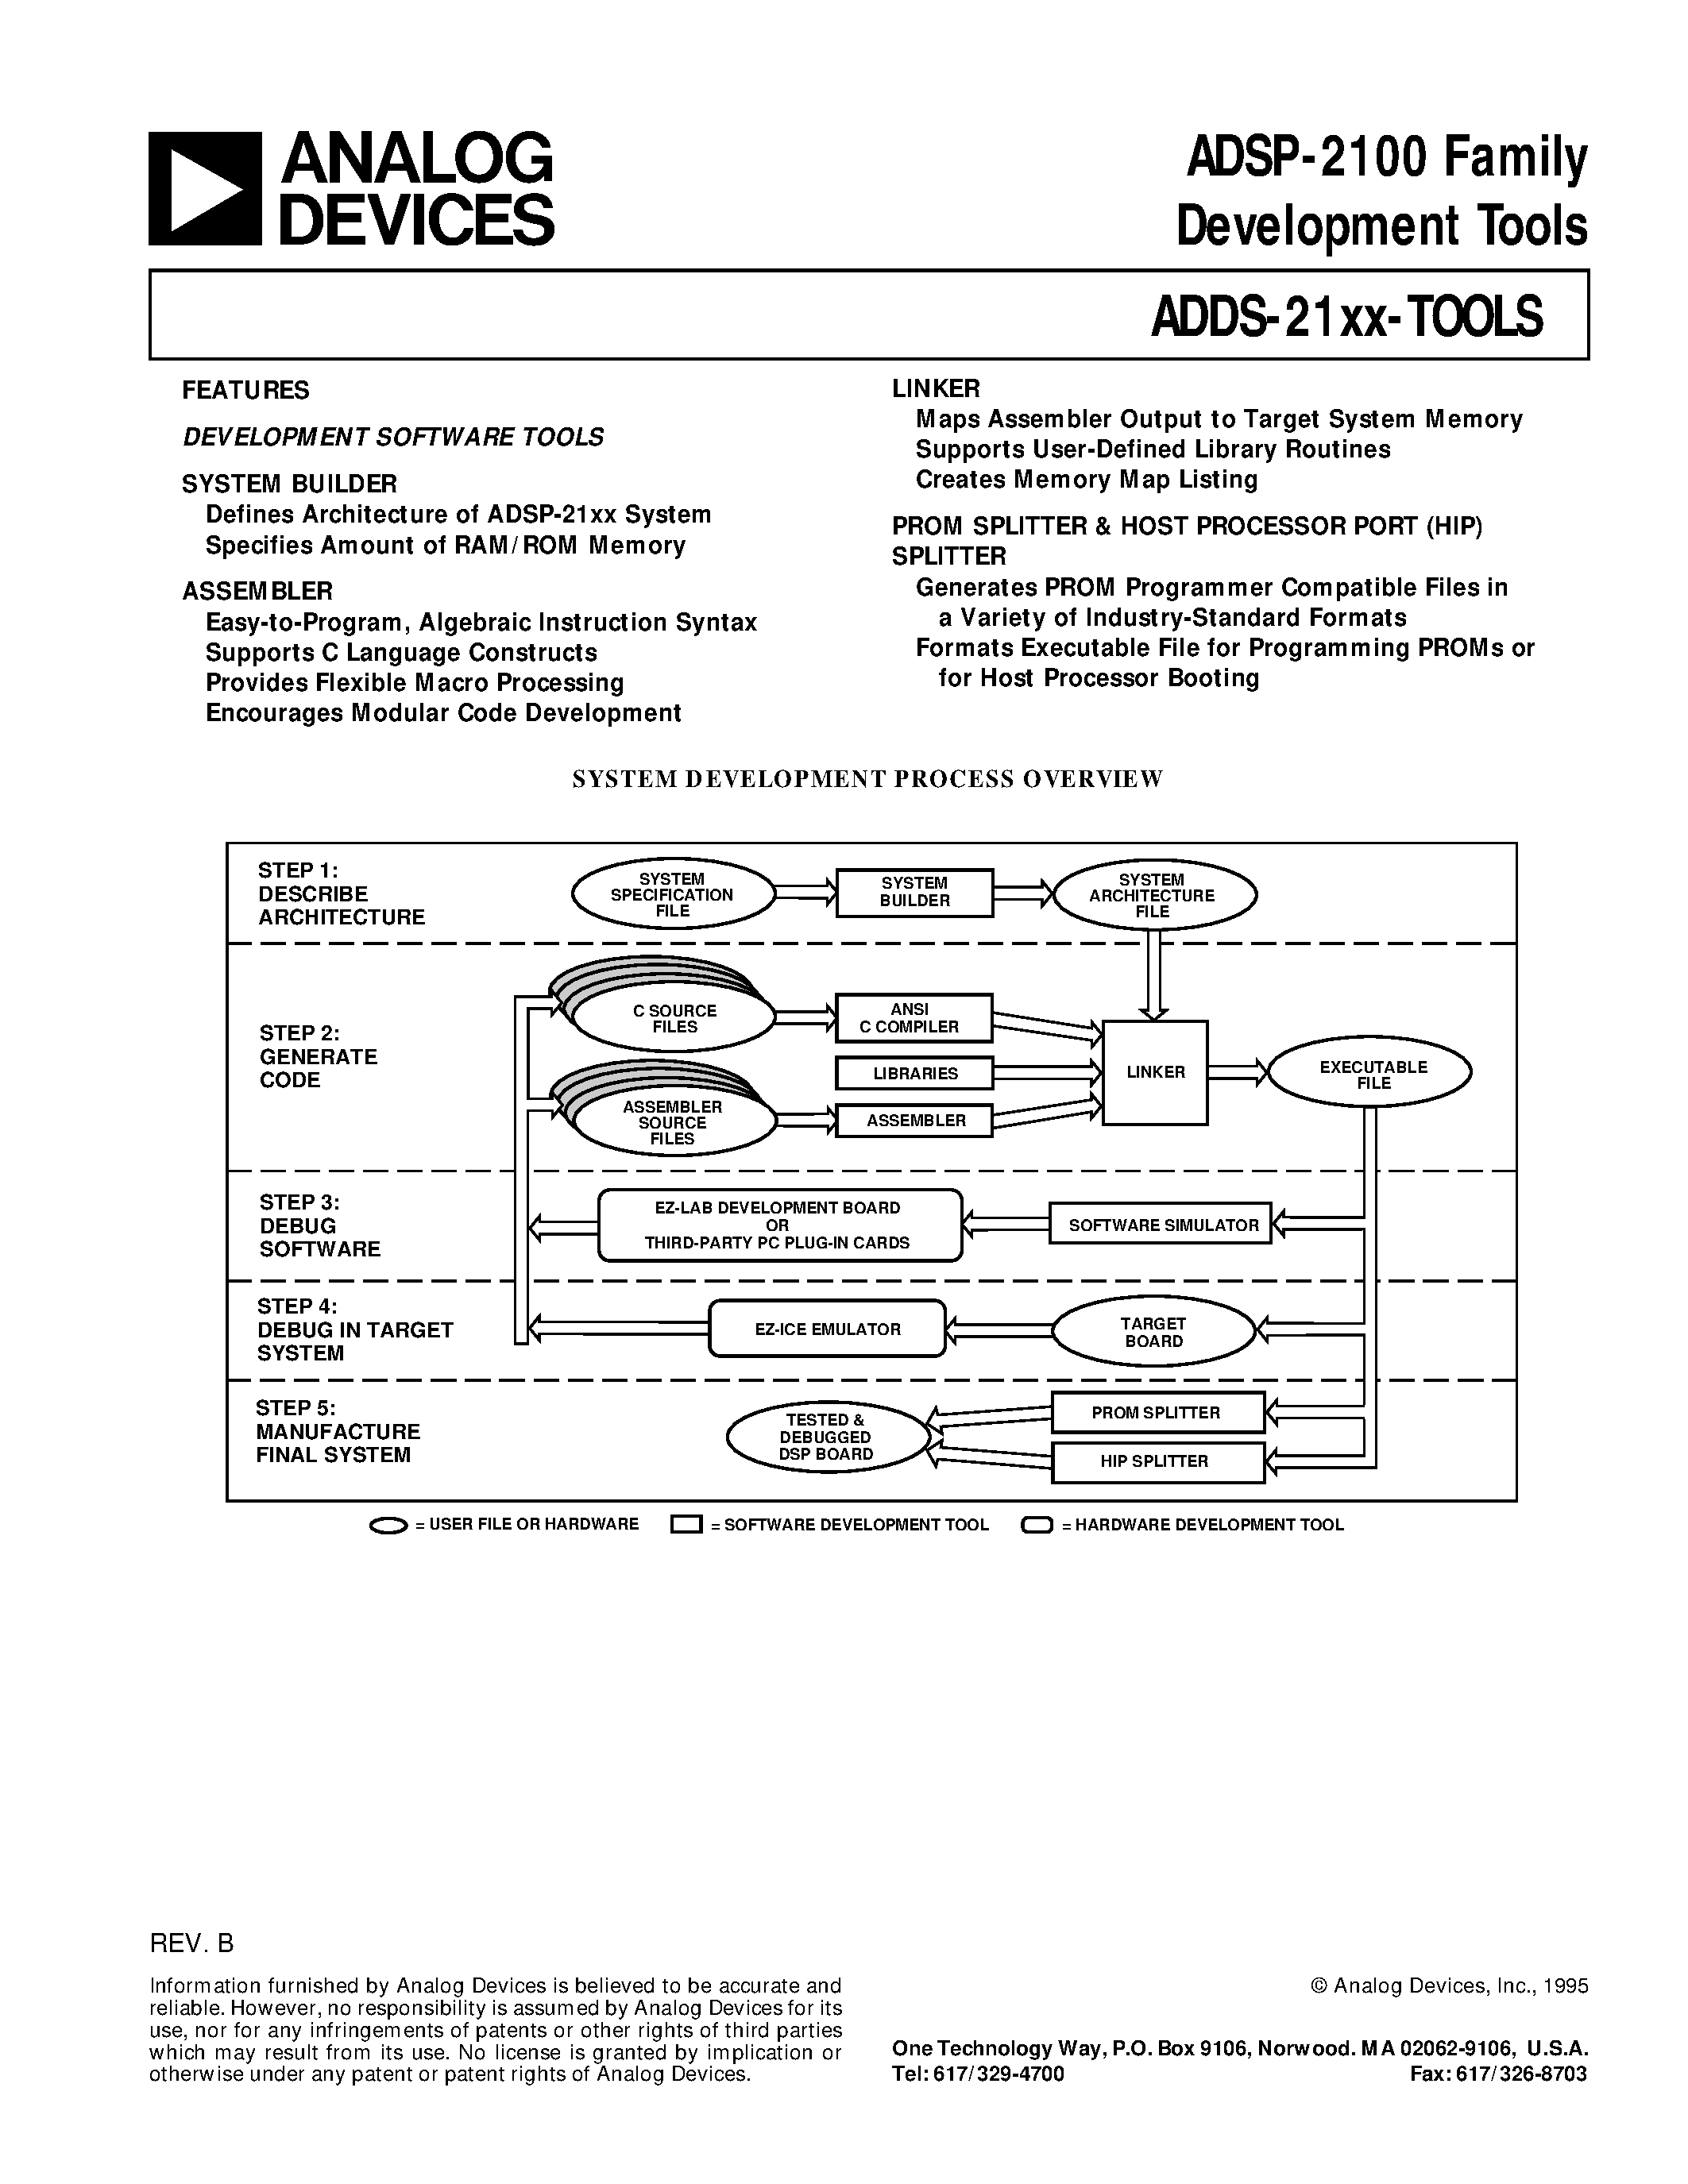 Даташит ADDS-2181-EZ-ICE - ADSP-2100 Family Development Tools страница 1